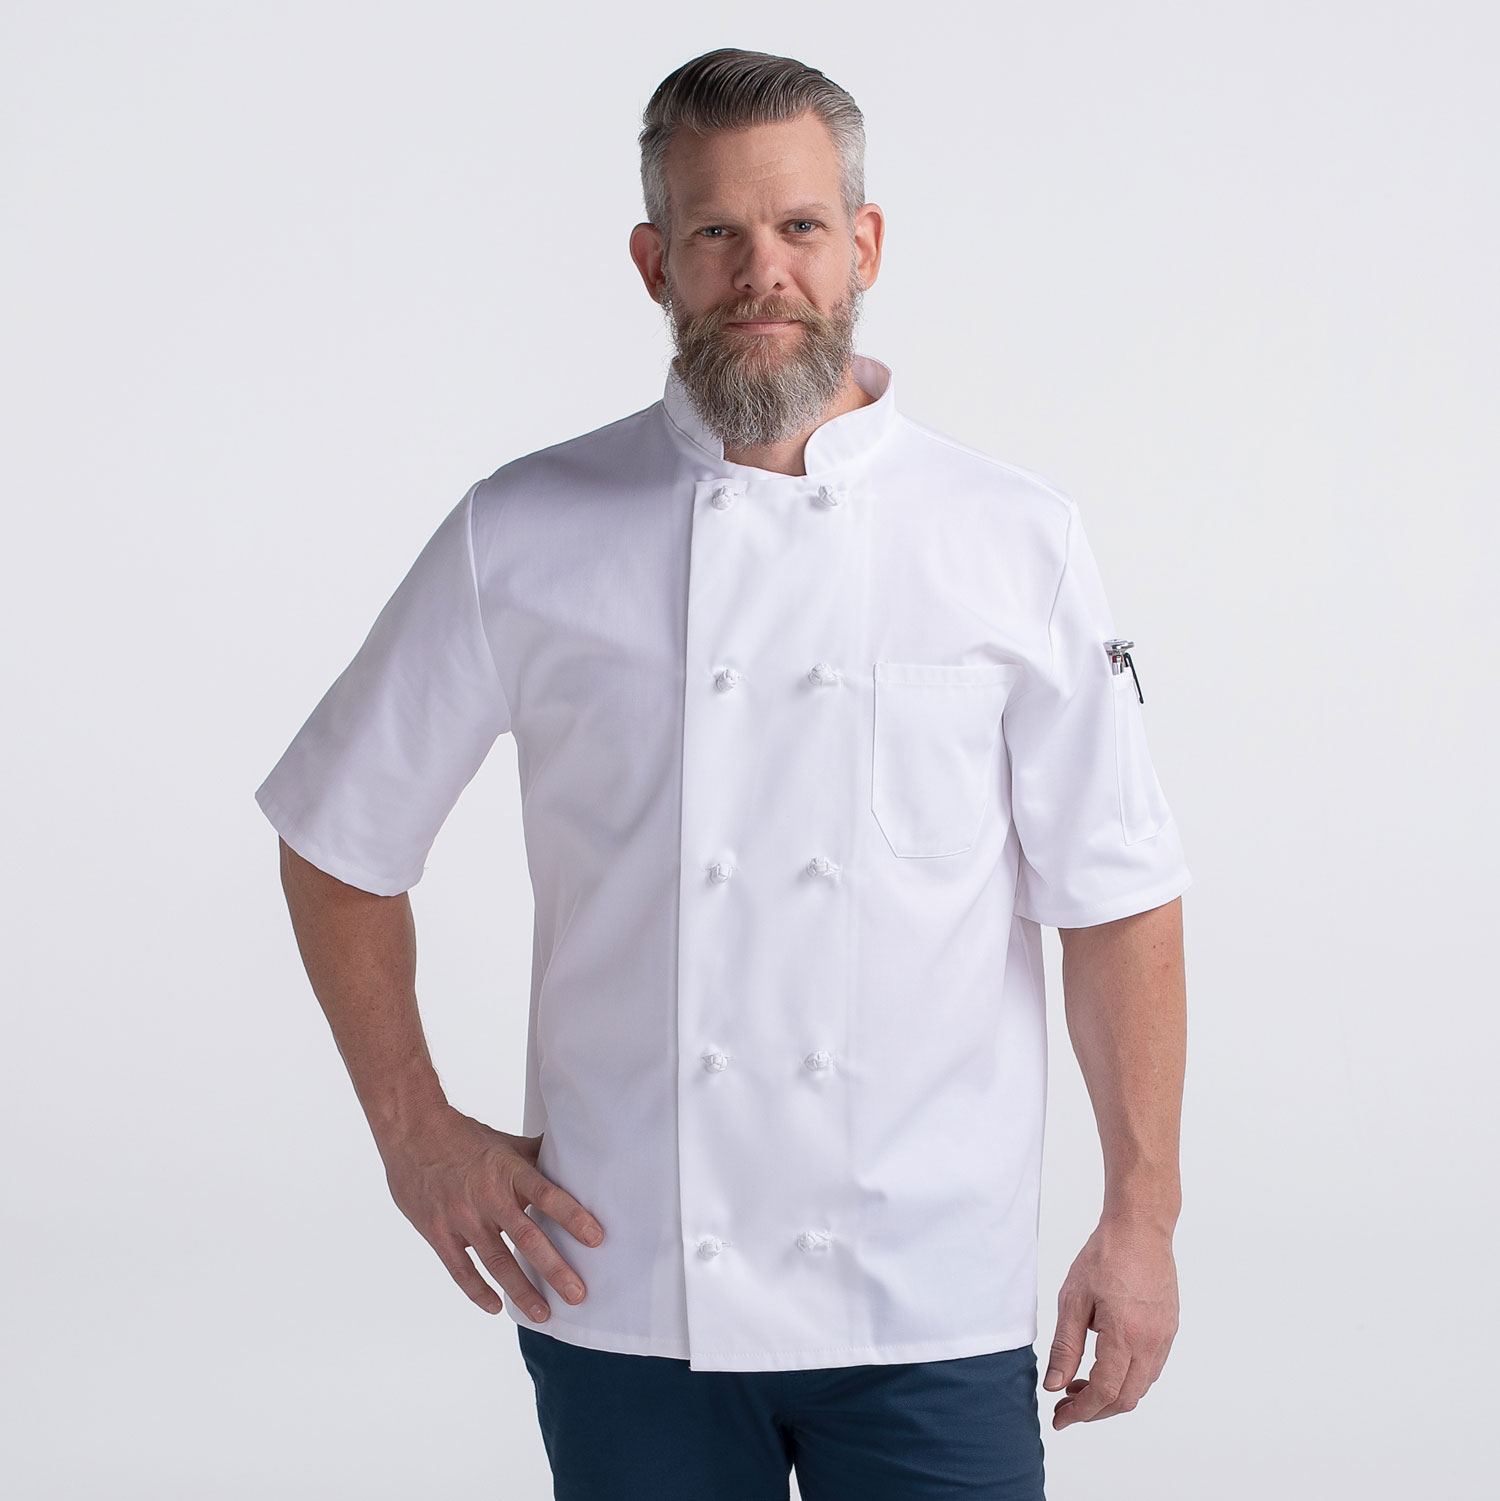 Unisex High Quality Chef Jacket Mens Womens Short Sleeves Chefwear Coat Uniform 